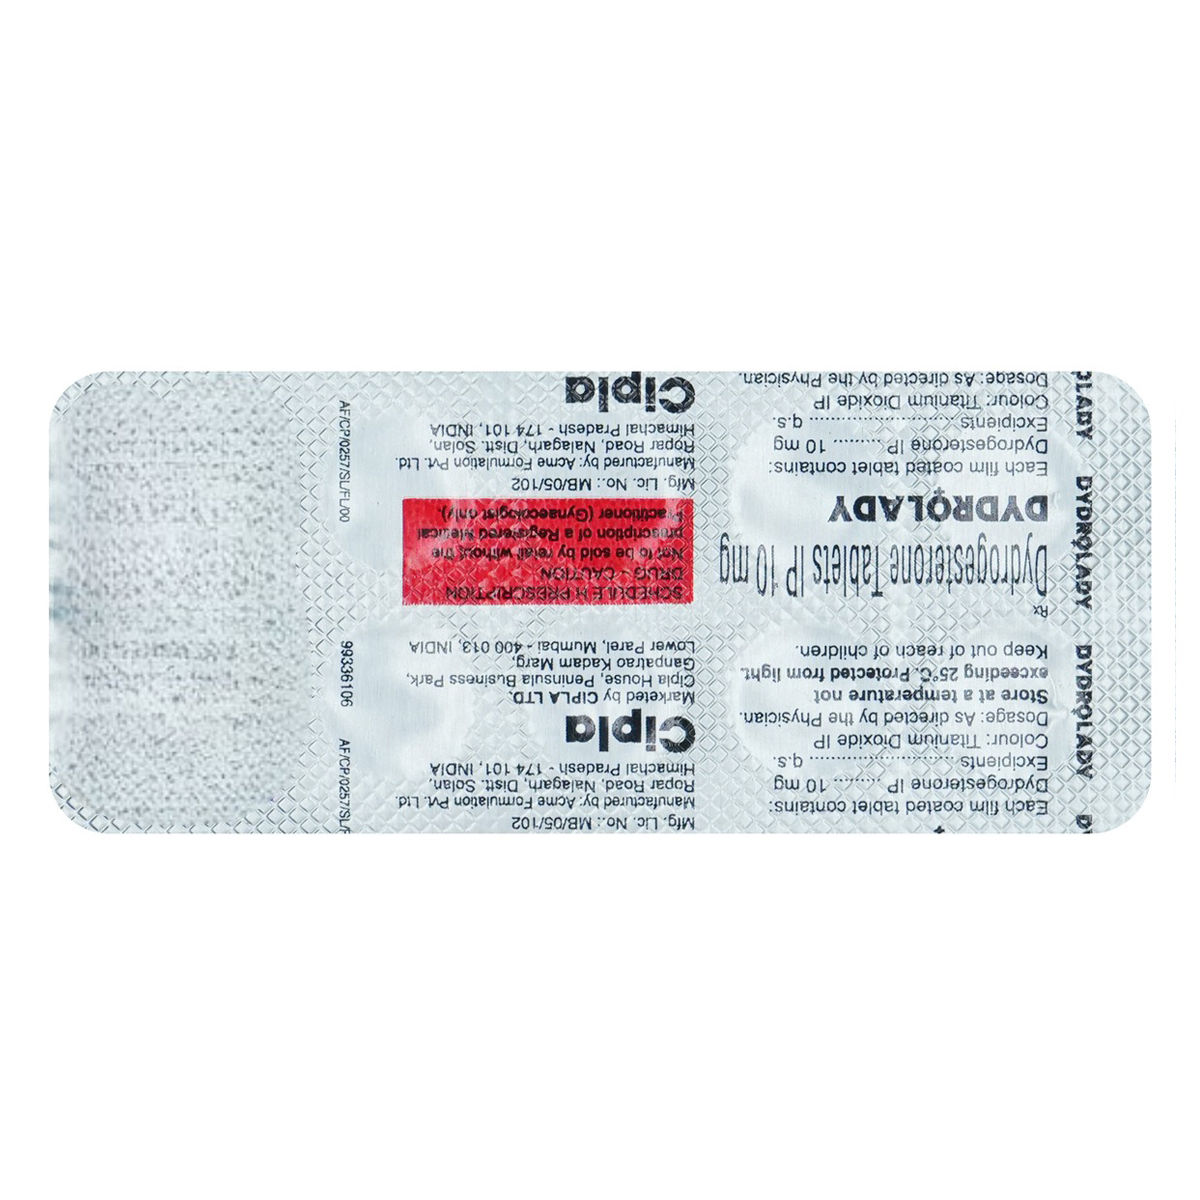 Buy Dydrolady 10 mg Tablet 10's Online